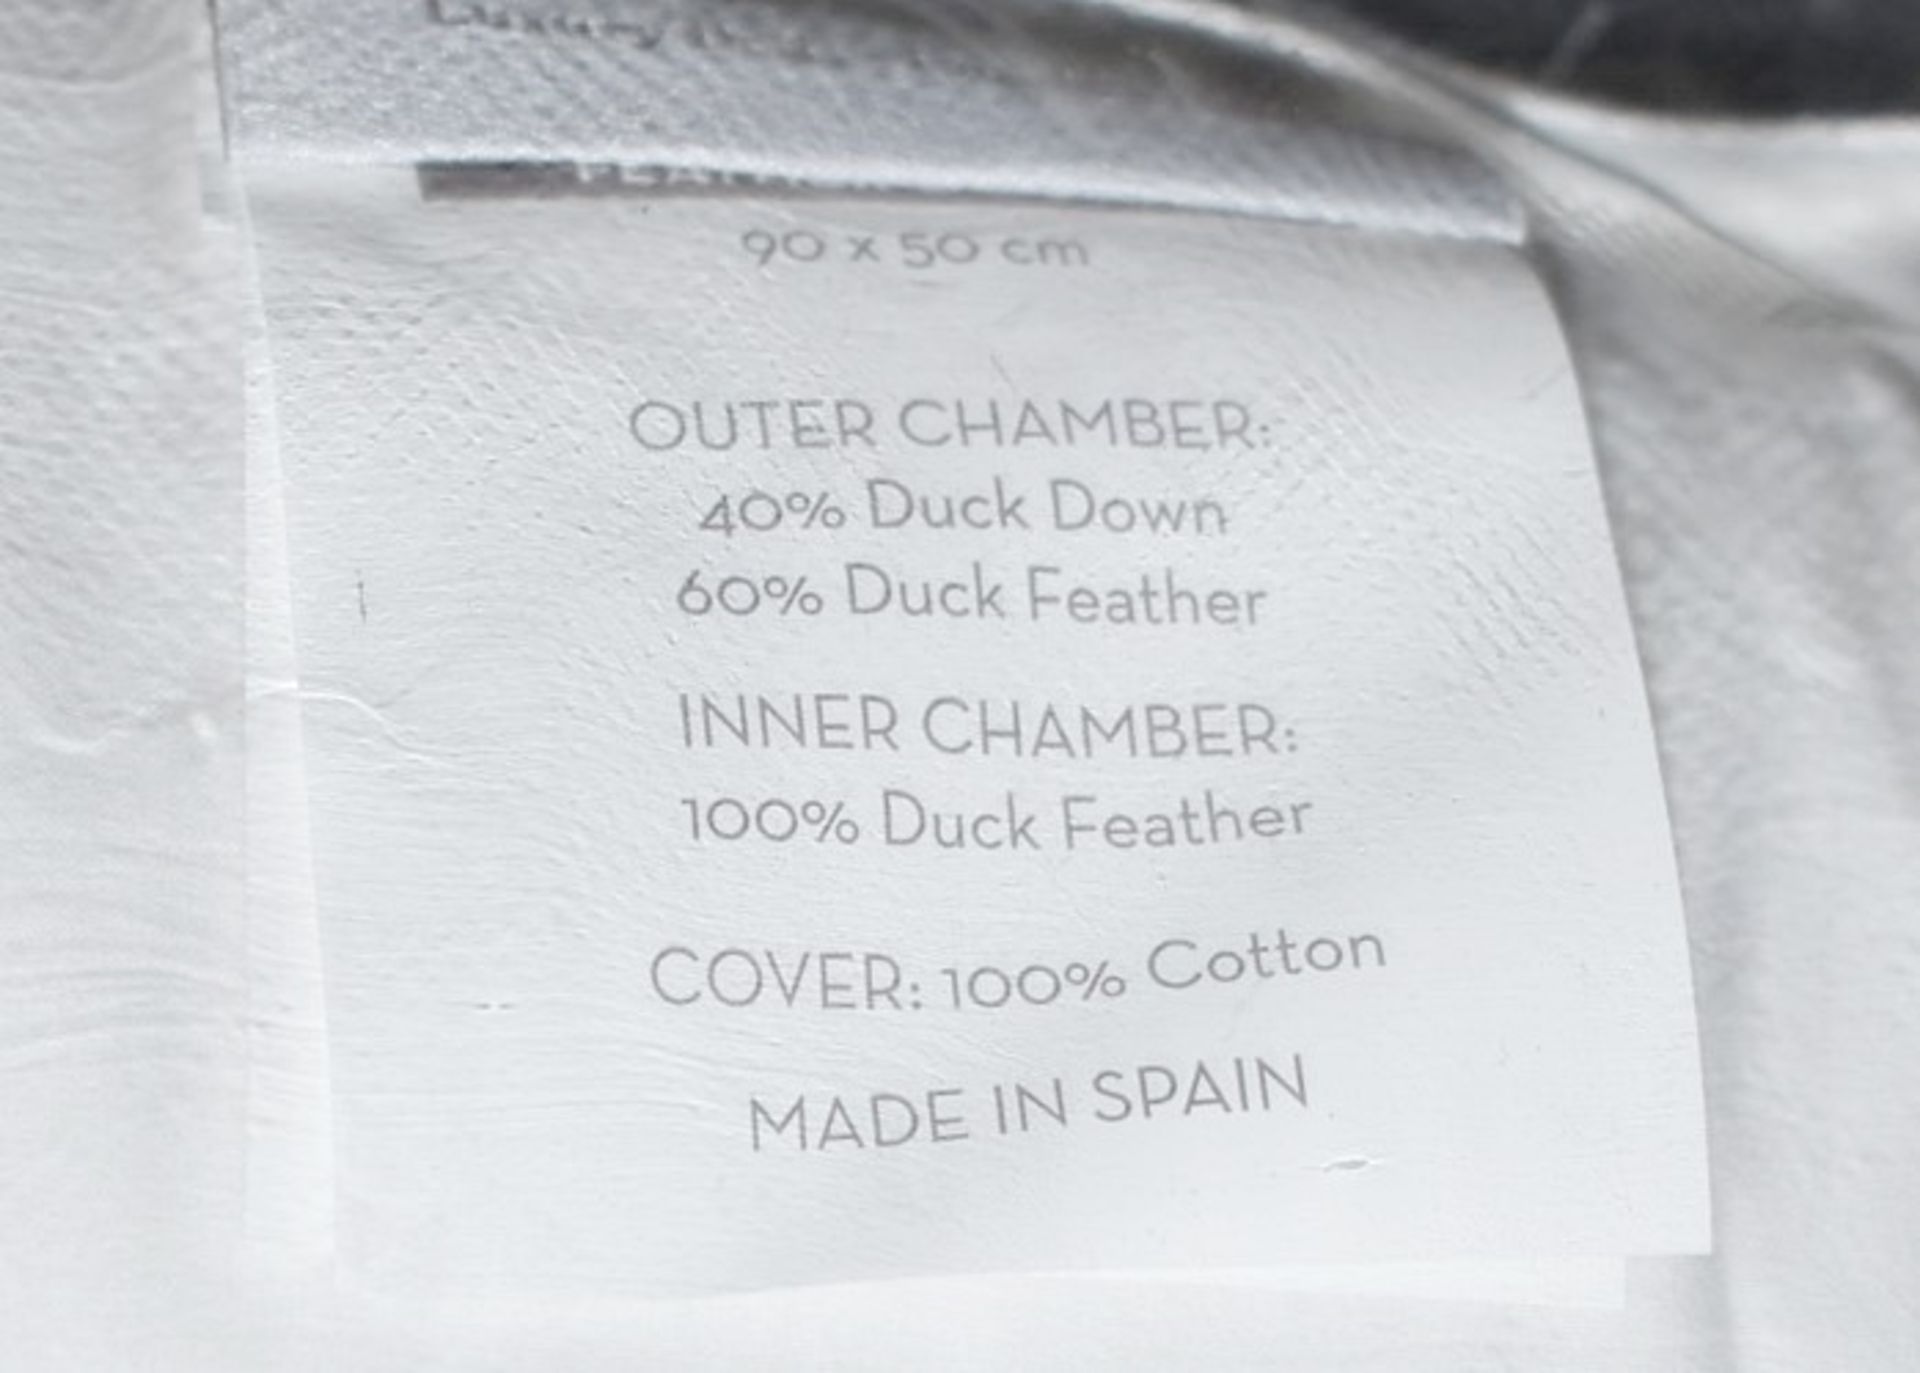 1 x VISPRING Luxury European Duck Feather & Down KINGSIZE Pillow, 90x50cm - Sealed Stock - Image 4 of 4